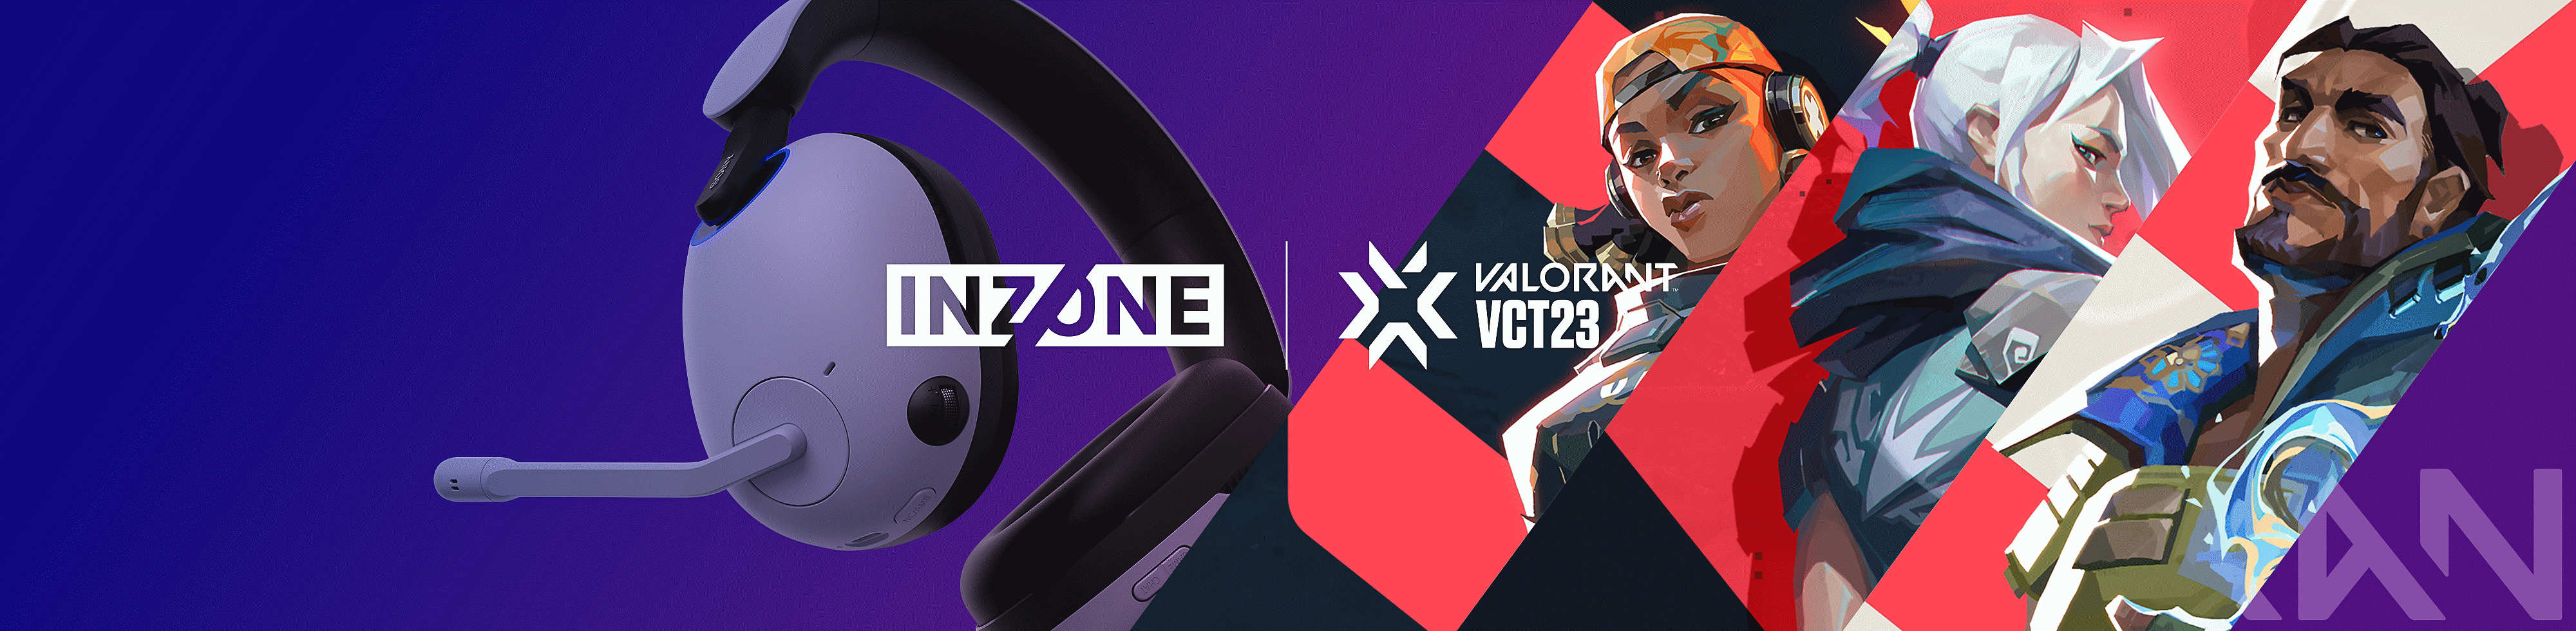 VALORANT 캐릭터와 INZONE 및 VALORANT VCT23 로고가 있는 소니 INZONE H9 게임용 헤드셋의 이미지